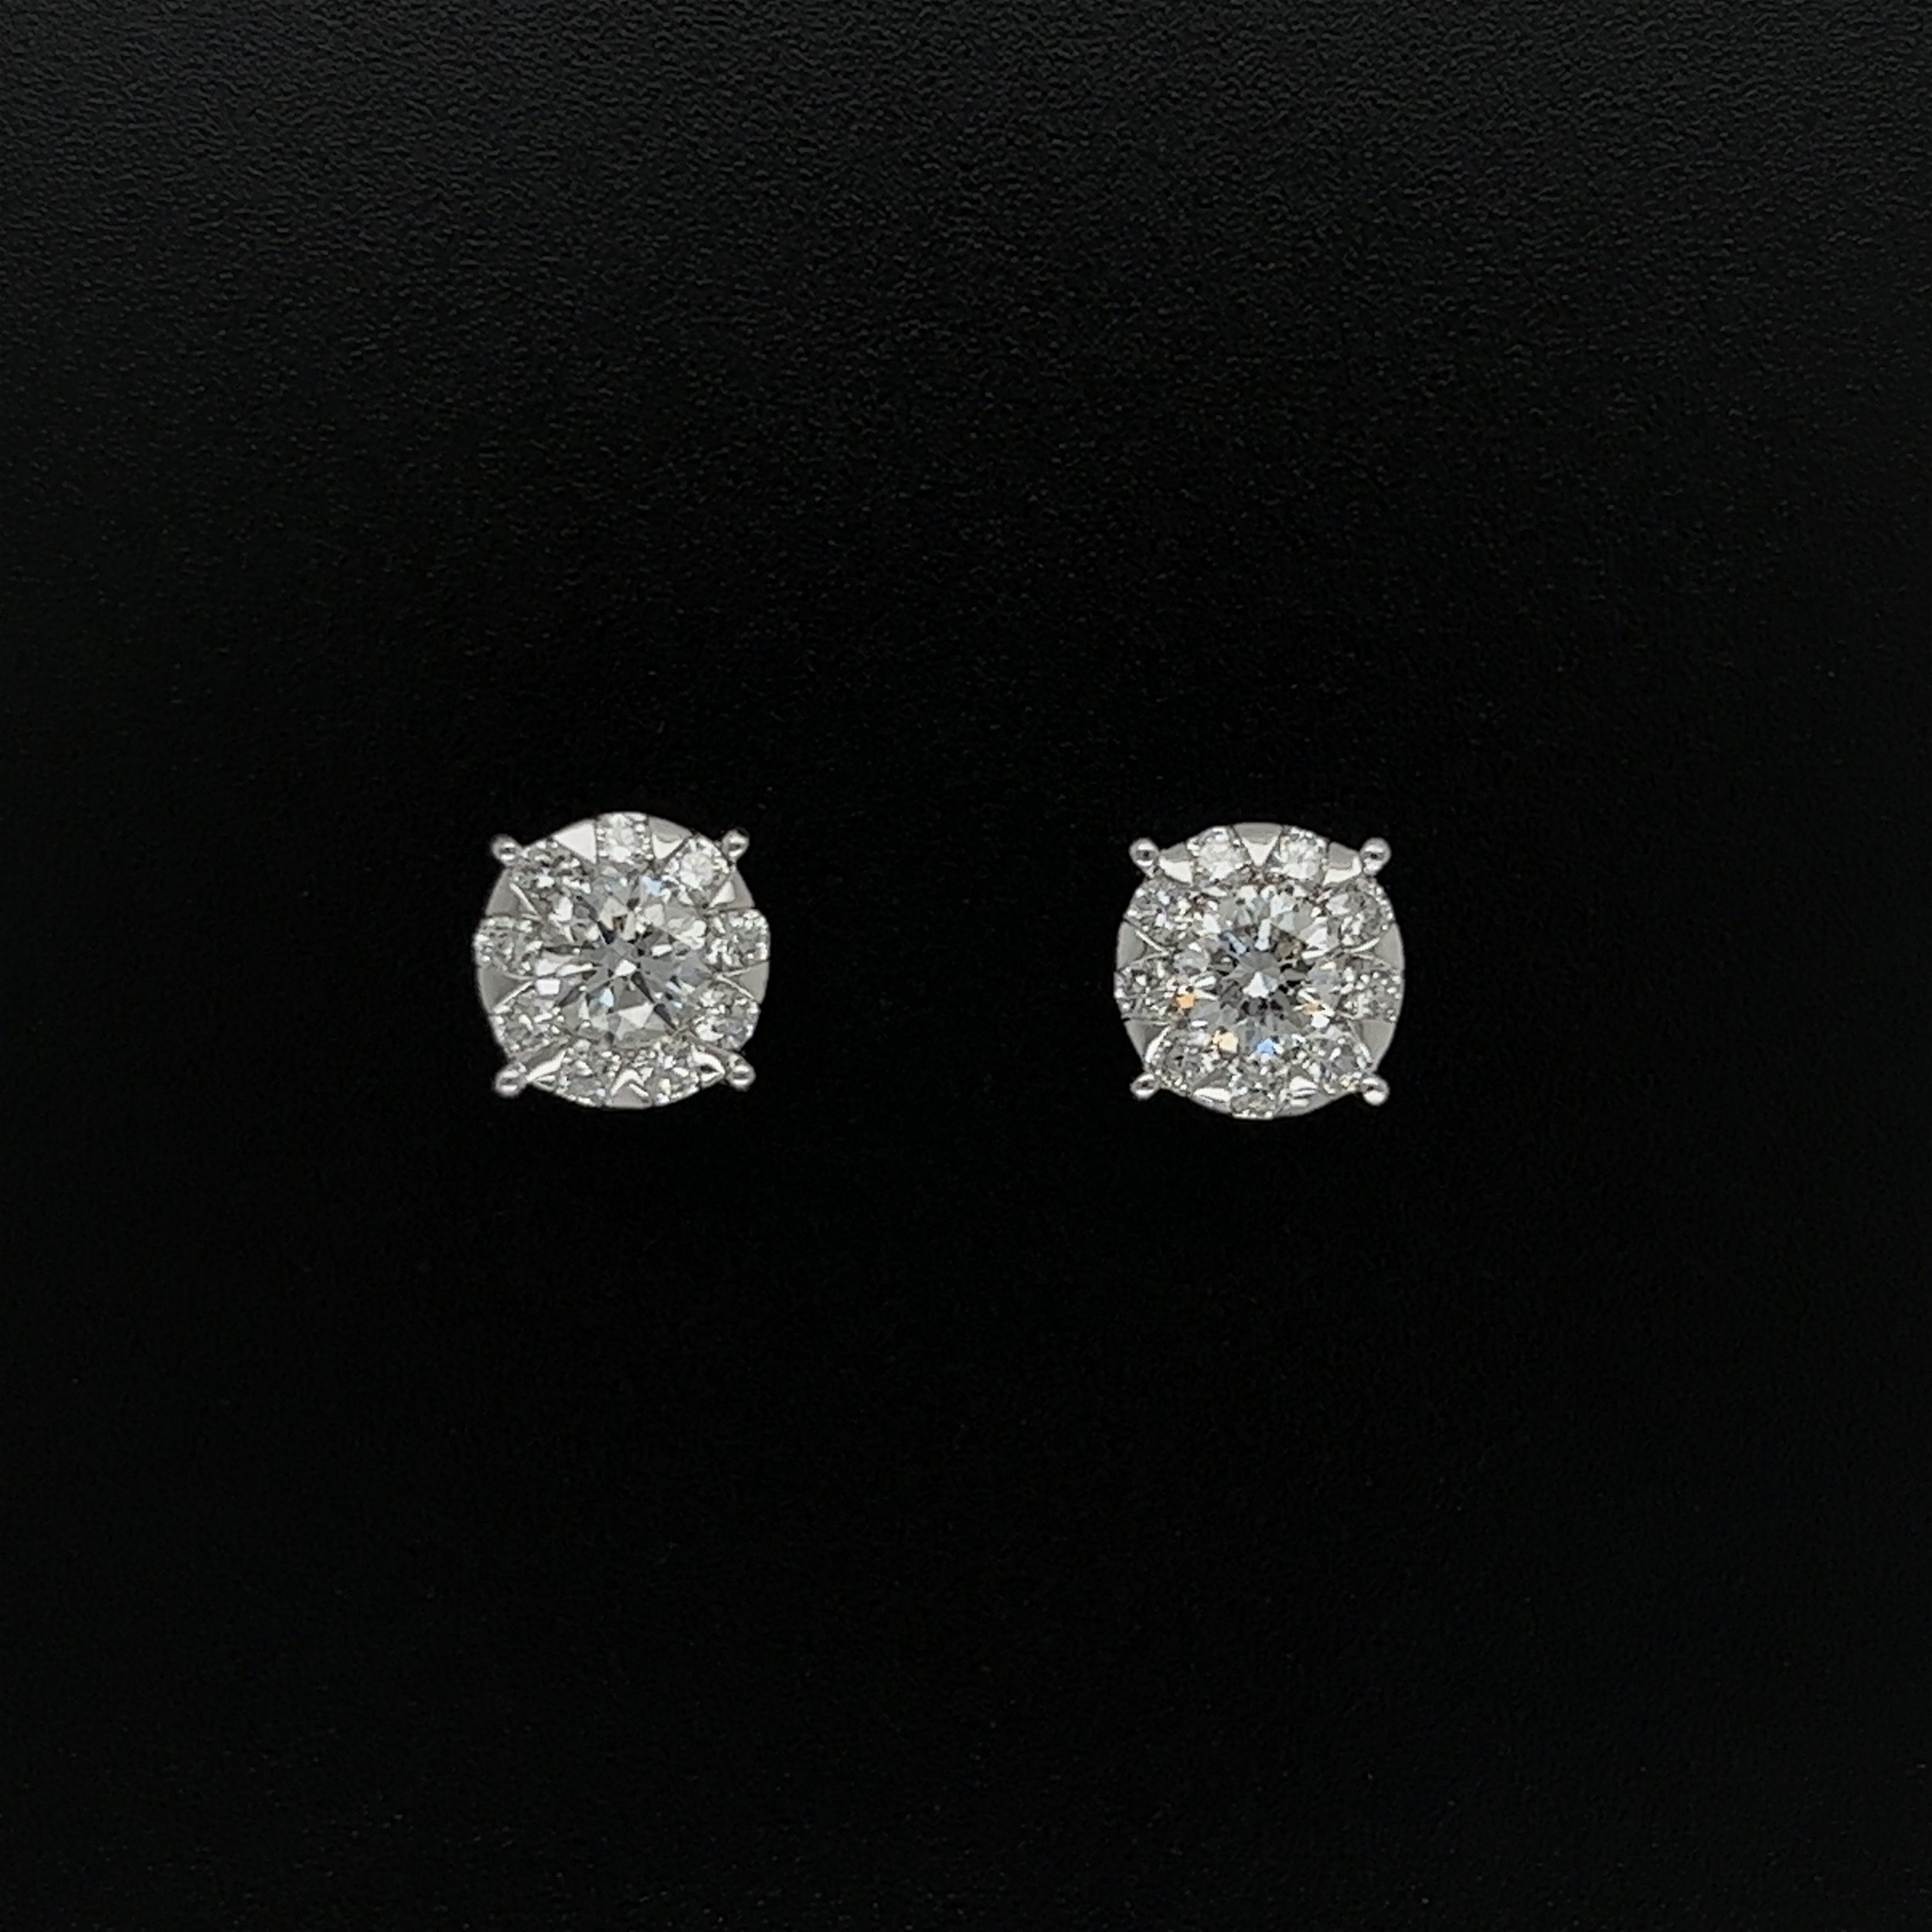 18K WG MEMOIRE 1.03tcw Diamond Cluster Stud Earrings 3.78g, 7.4mm